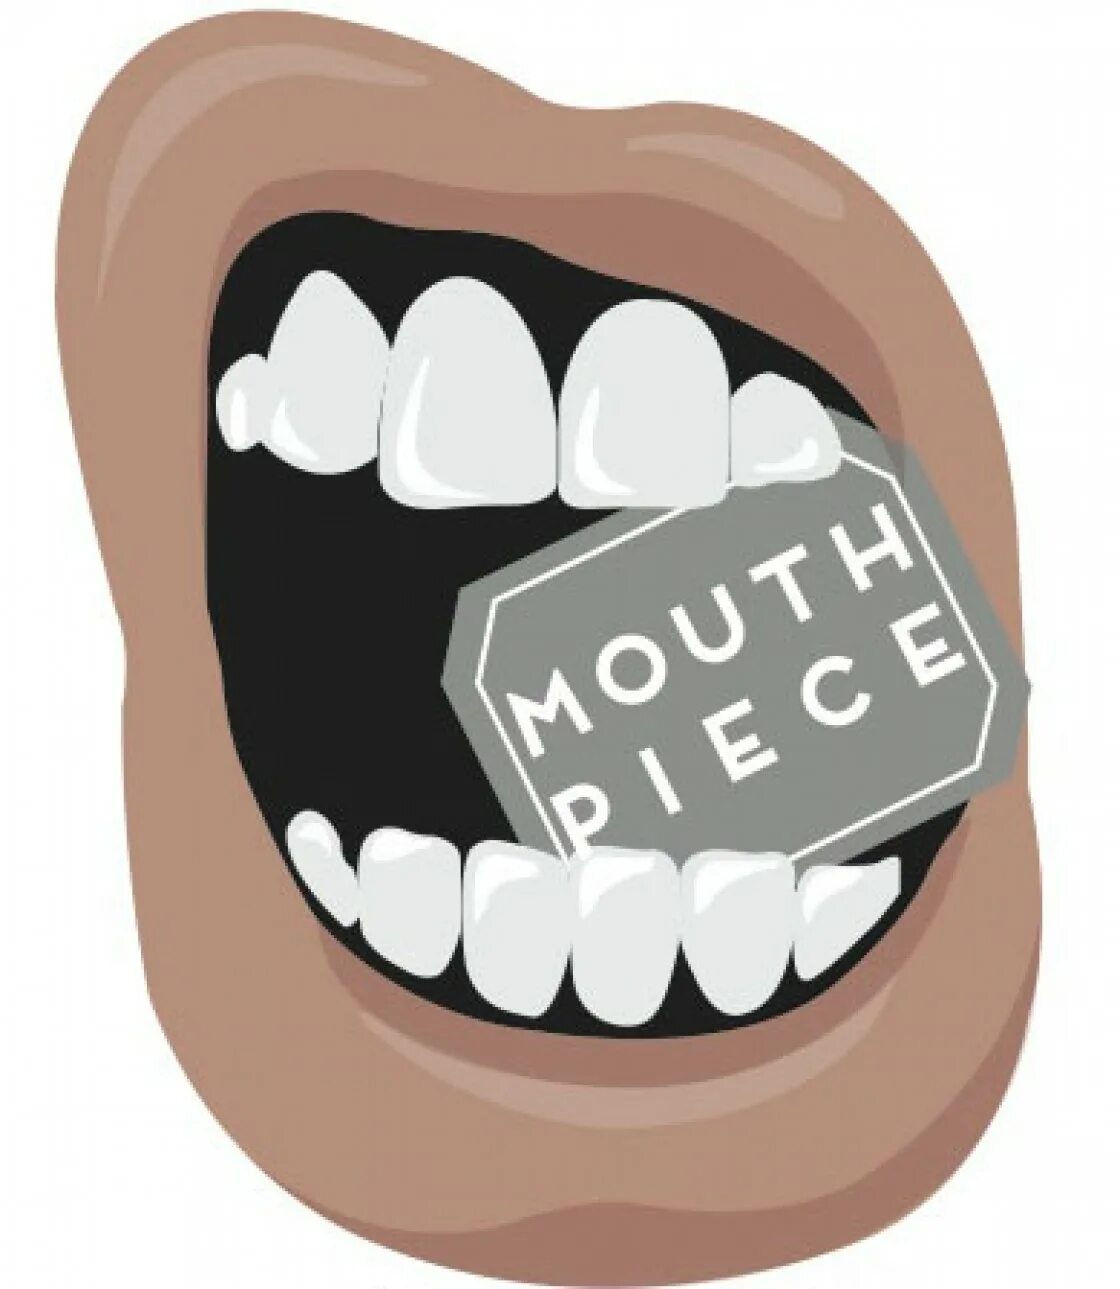 Логотип рот. Открытый рот логотип. Рот говорящий логотип.